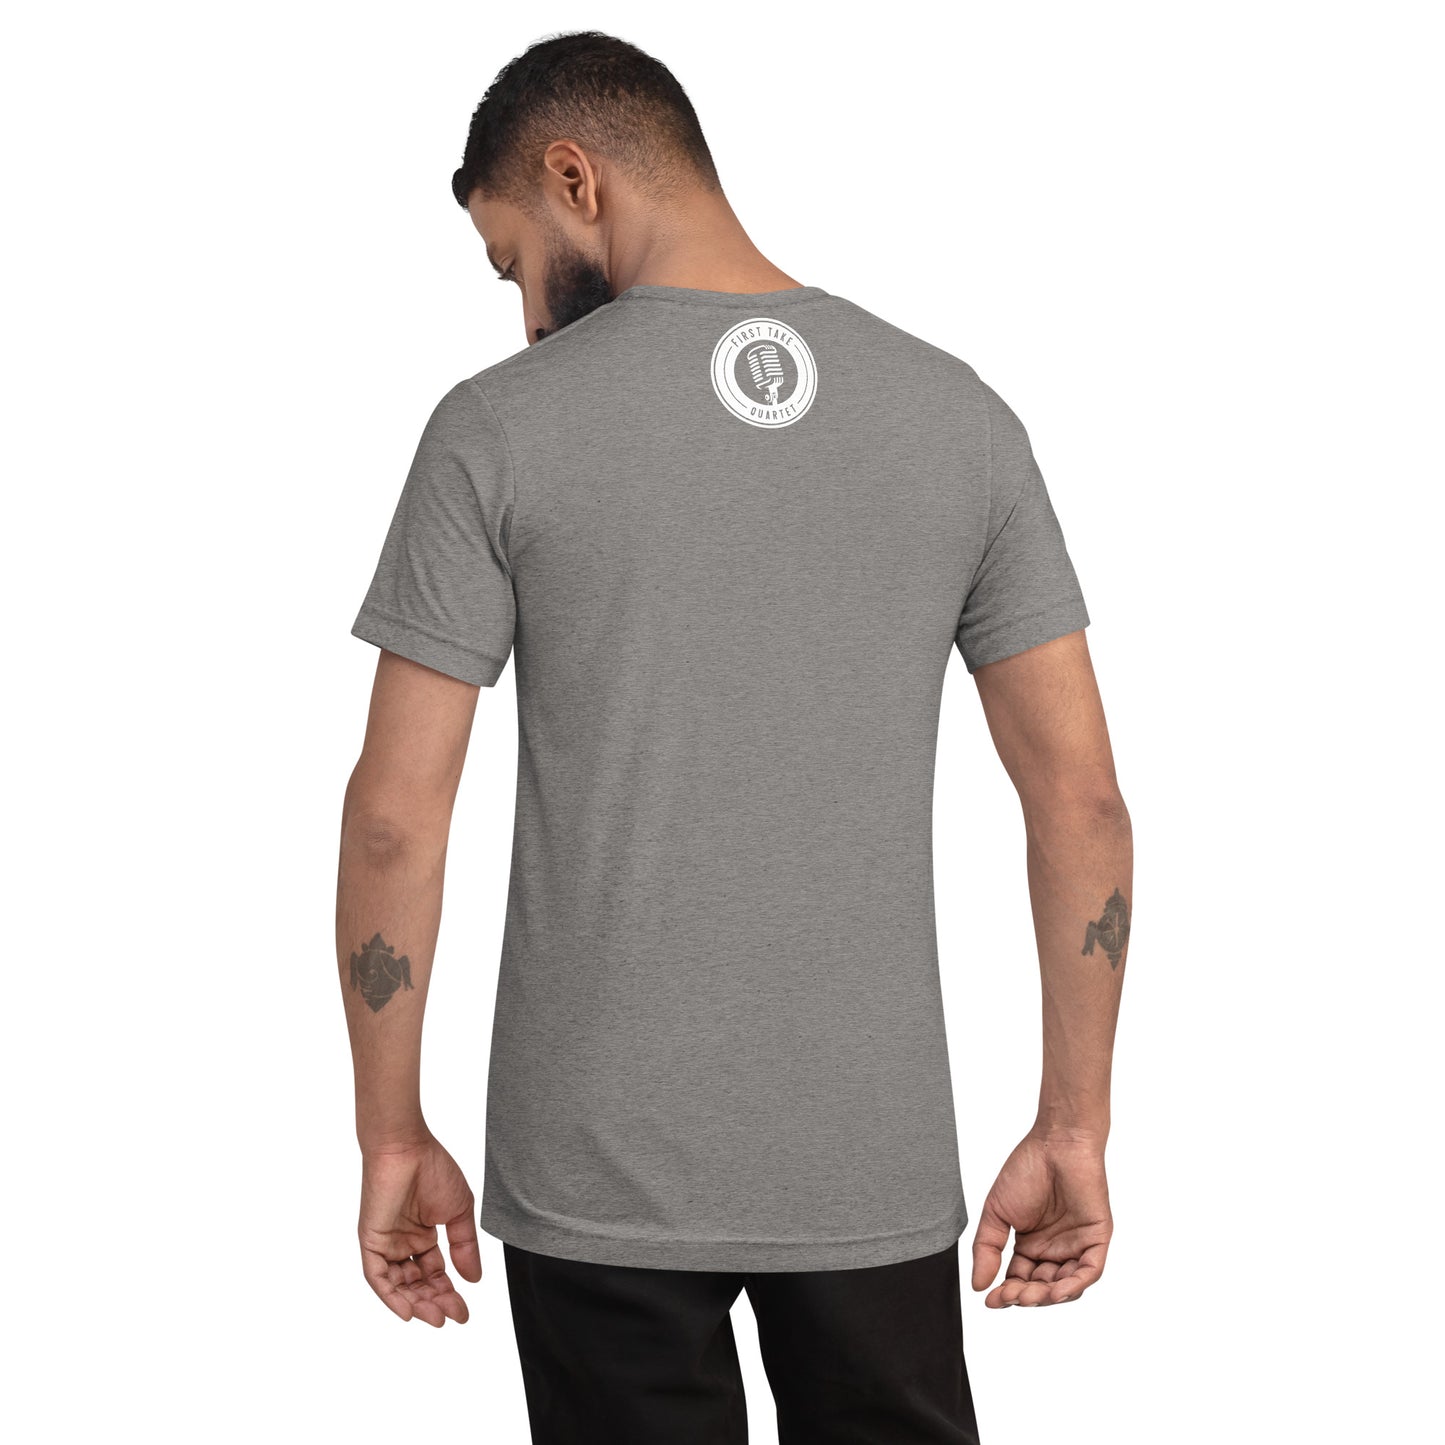 First Take - Printed Super Soft Triblend Short sleeve t-shirt